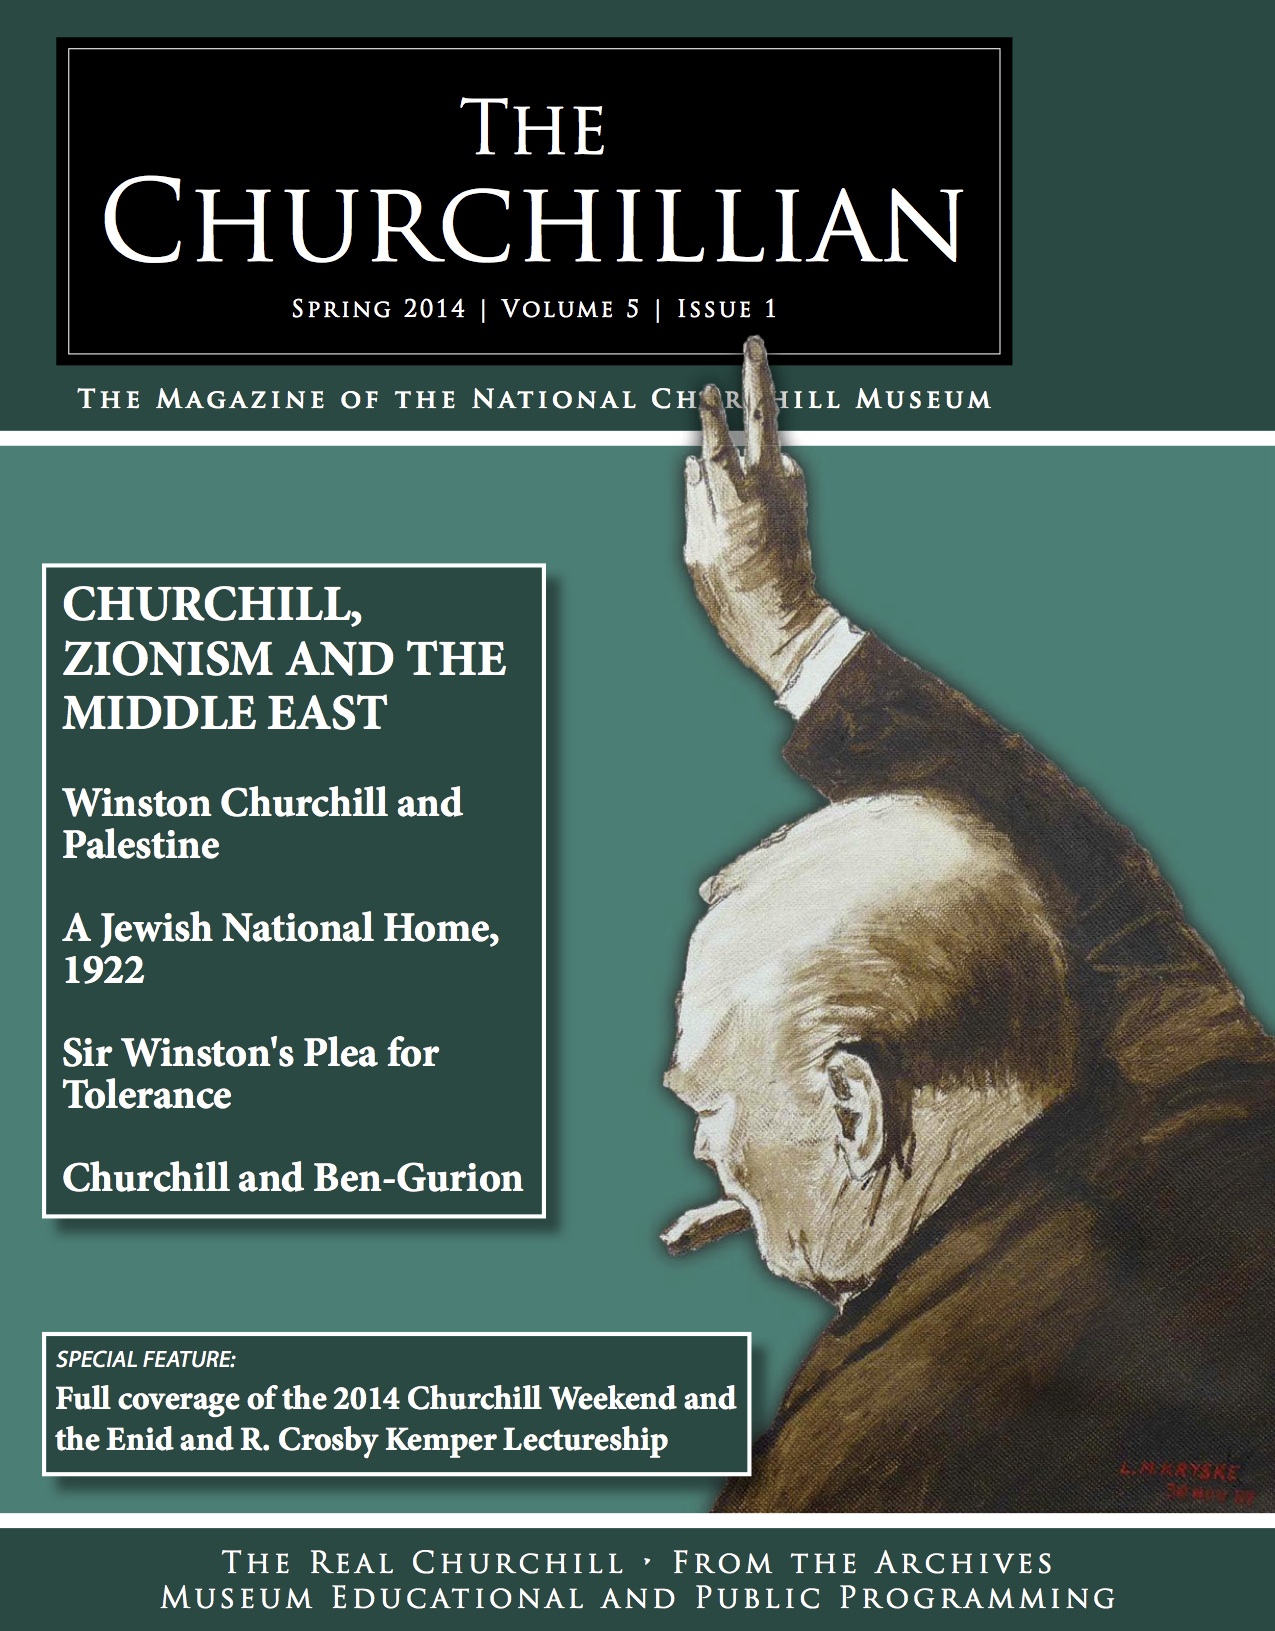 ChurchillianSpring2014